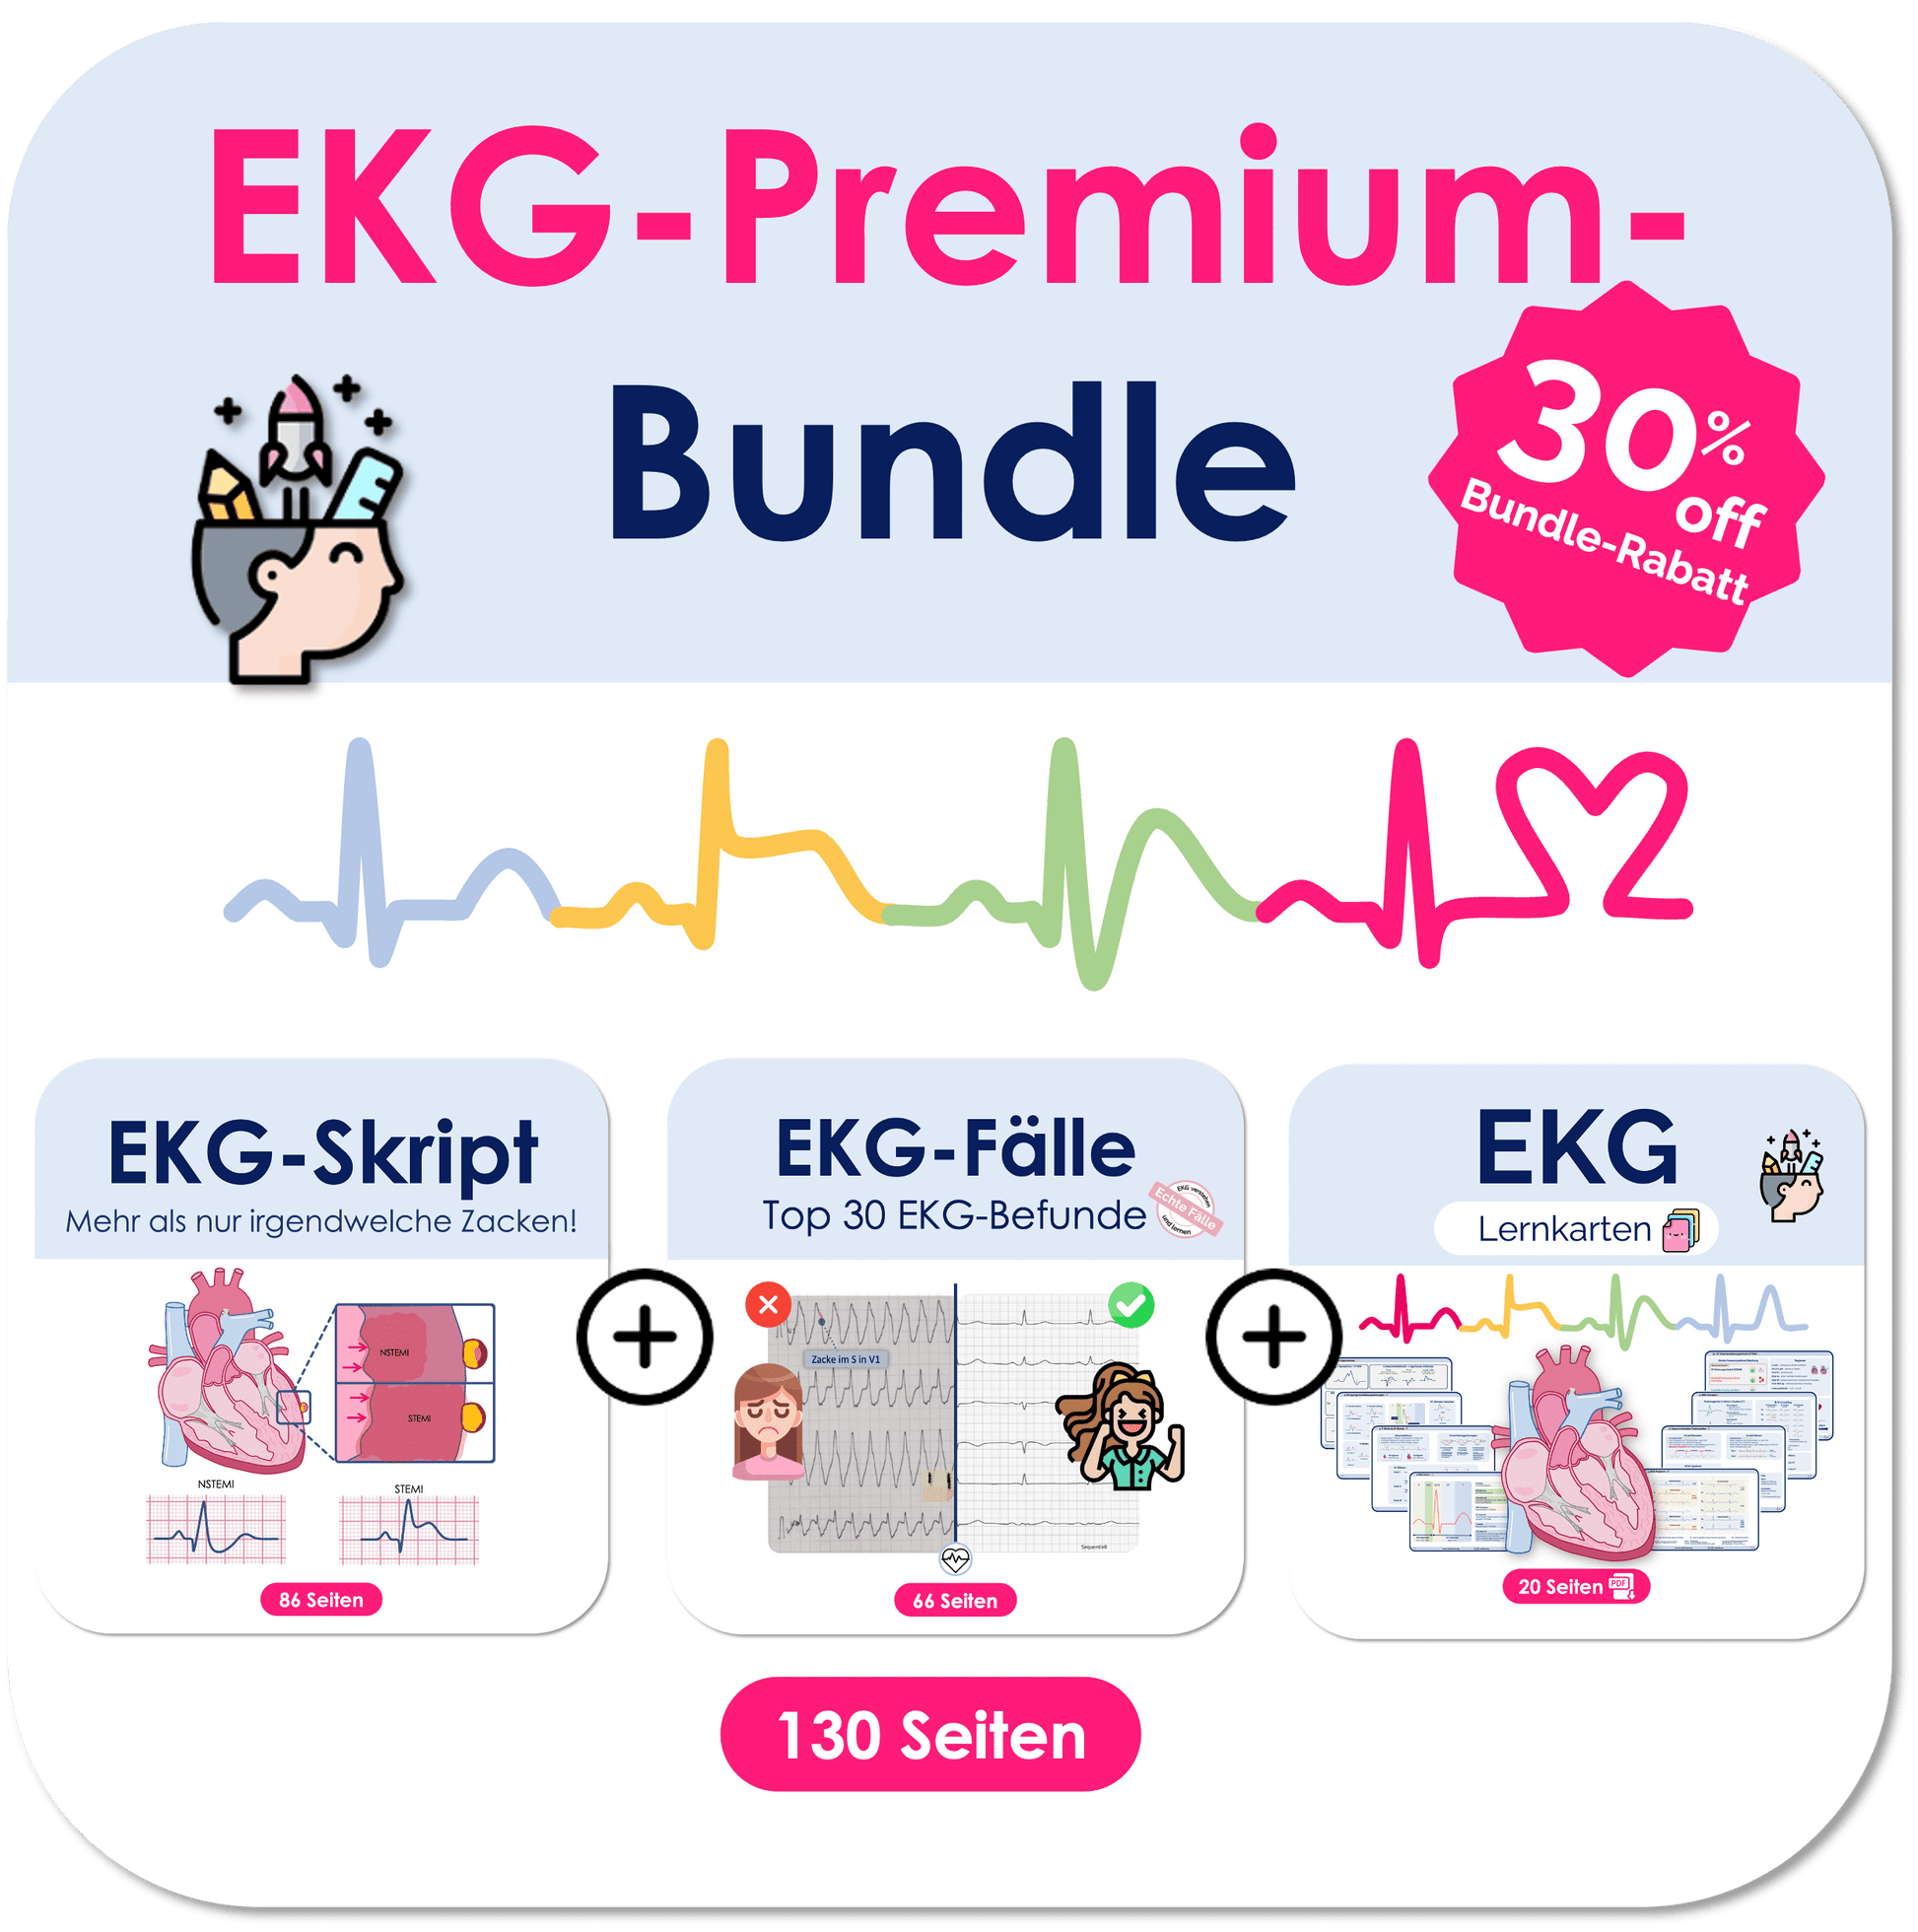 EKG-Premium-Paket (30% off) Skripte Medi Know 